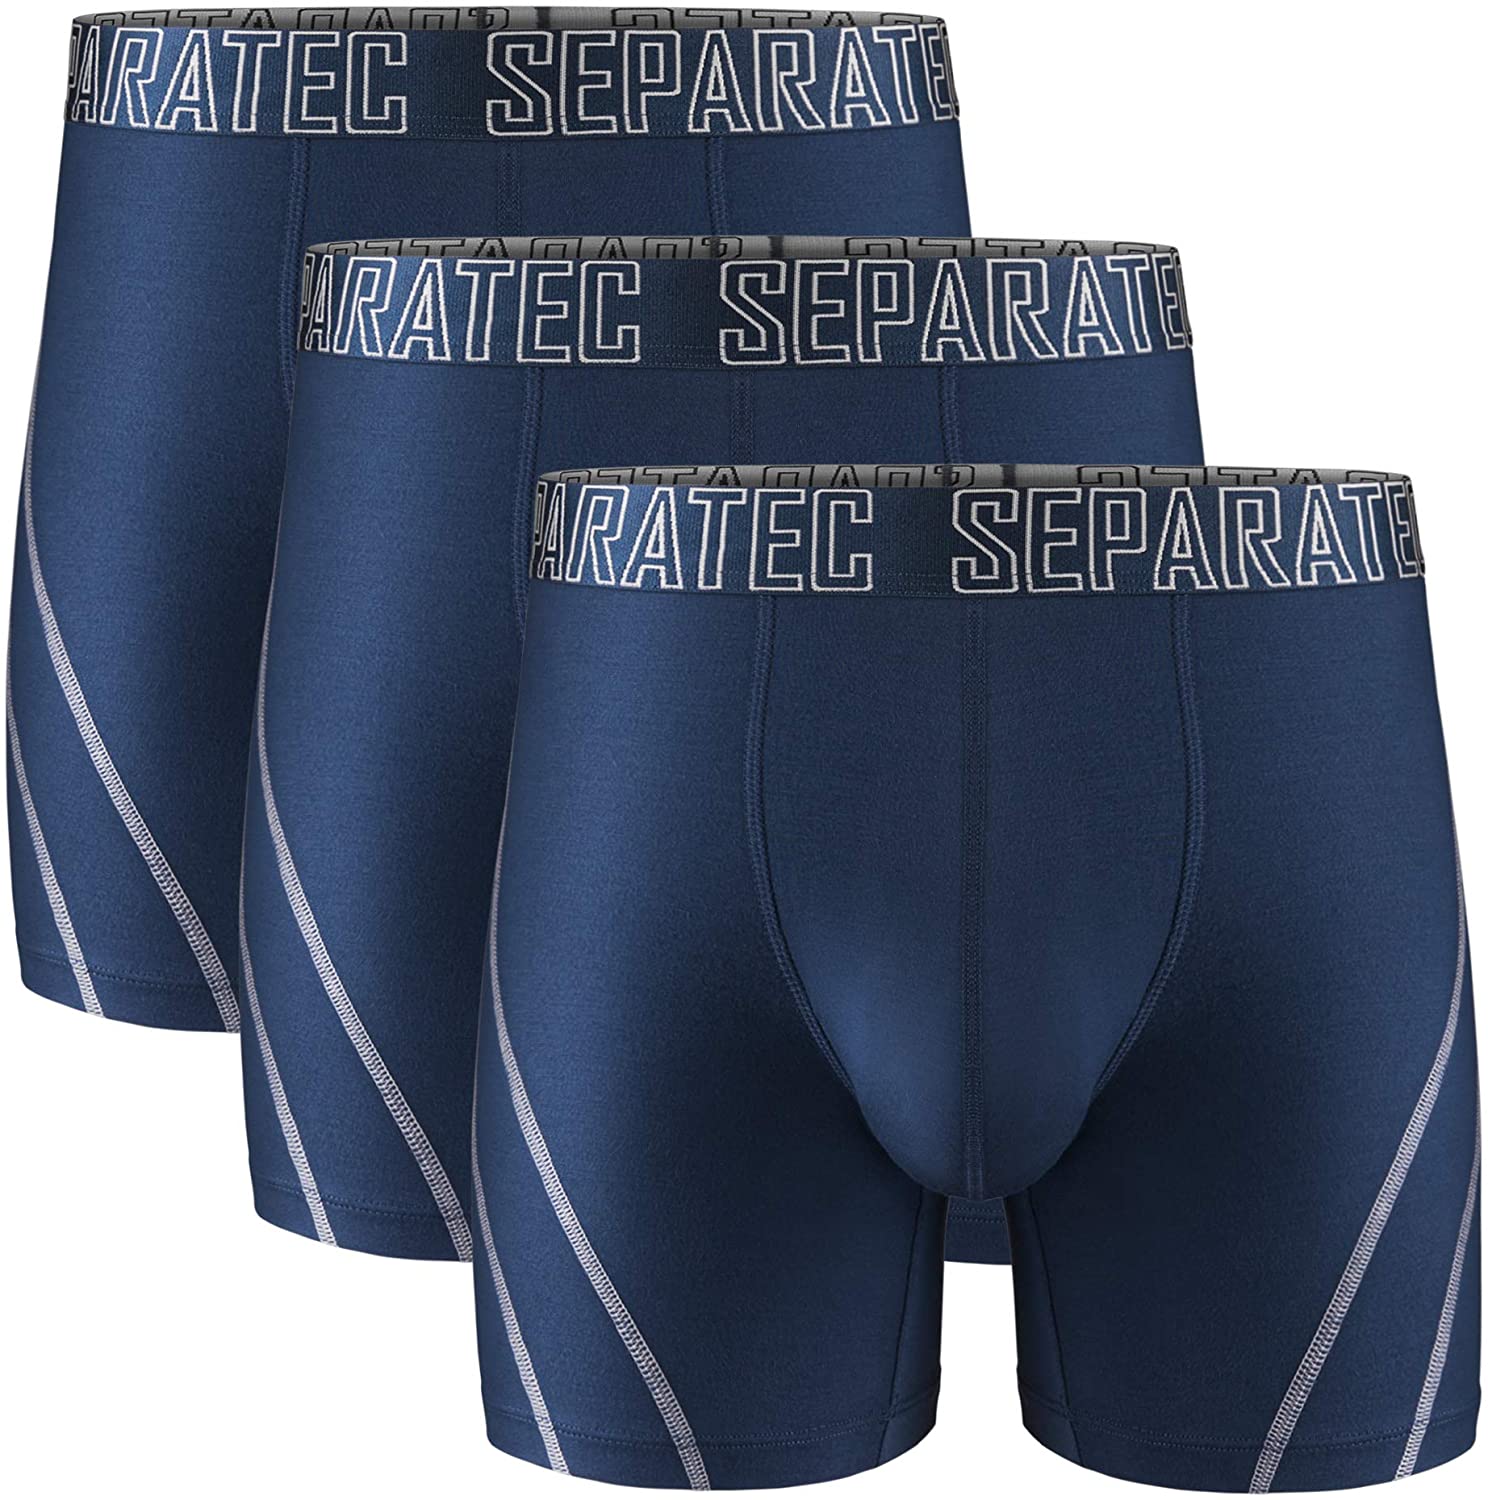 Separatec Men's Underwear Bamboo Rayon Mauritius